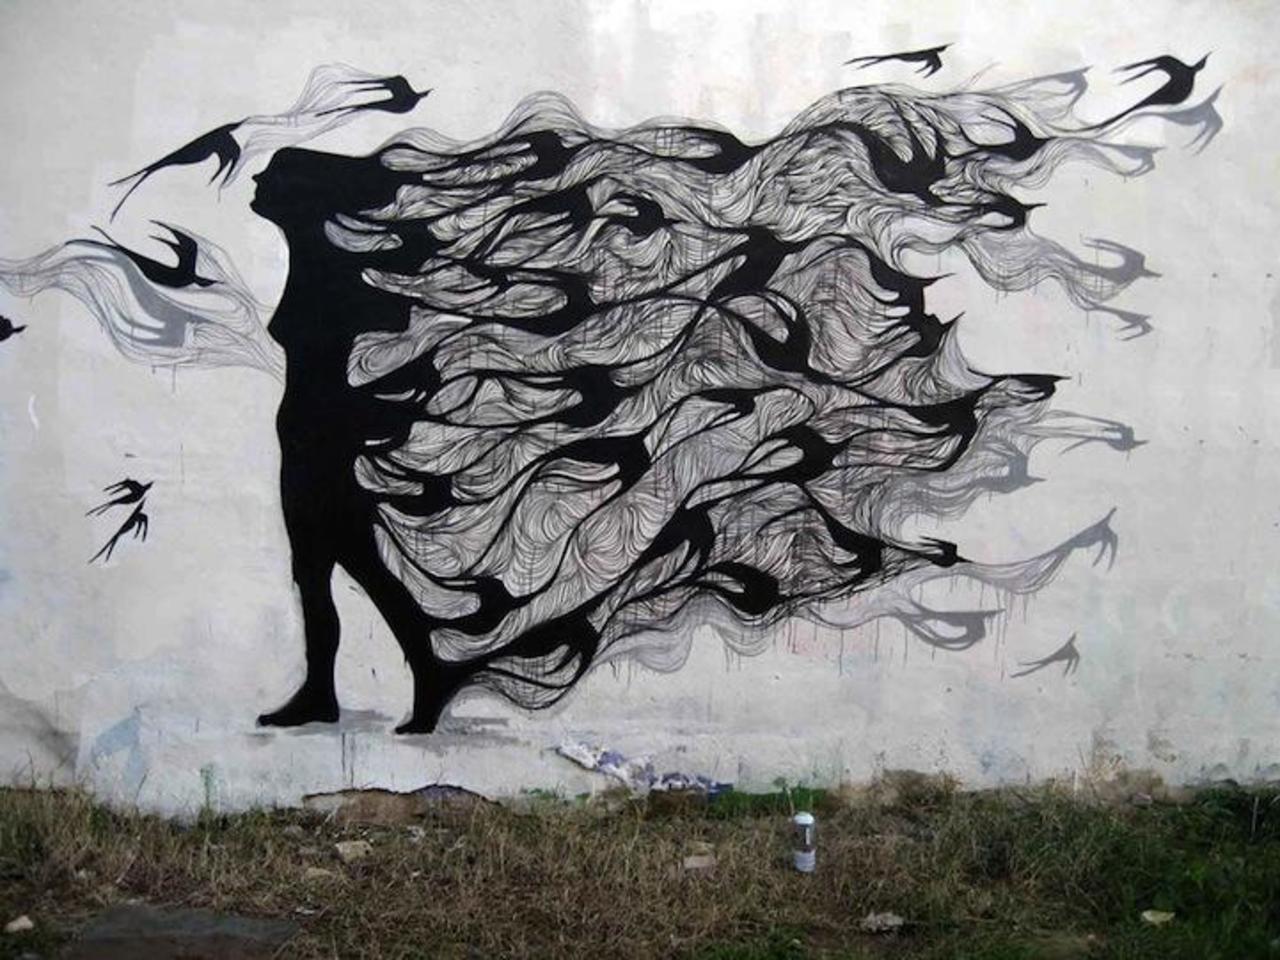 Stunning #artwork by hyuro ❤
#art #streetart #graffiti #blackandwhite #urbanart #Mural 
http://www.mymodernmet.com/profiles/blogs/10-street-artists-you-should http://t.co/oylpyFudZc